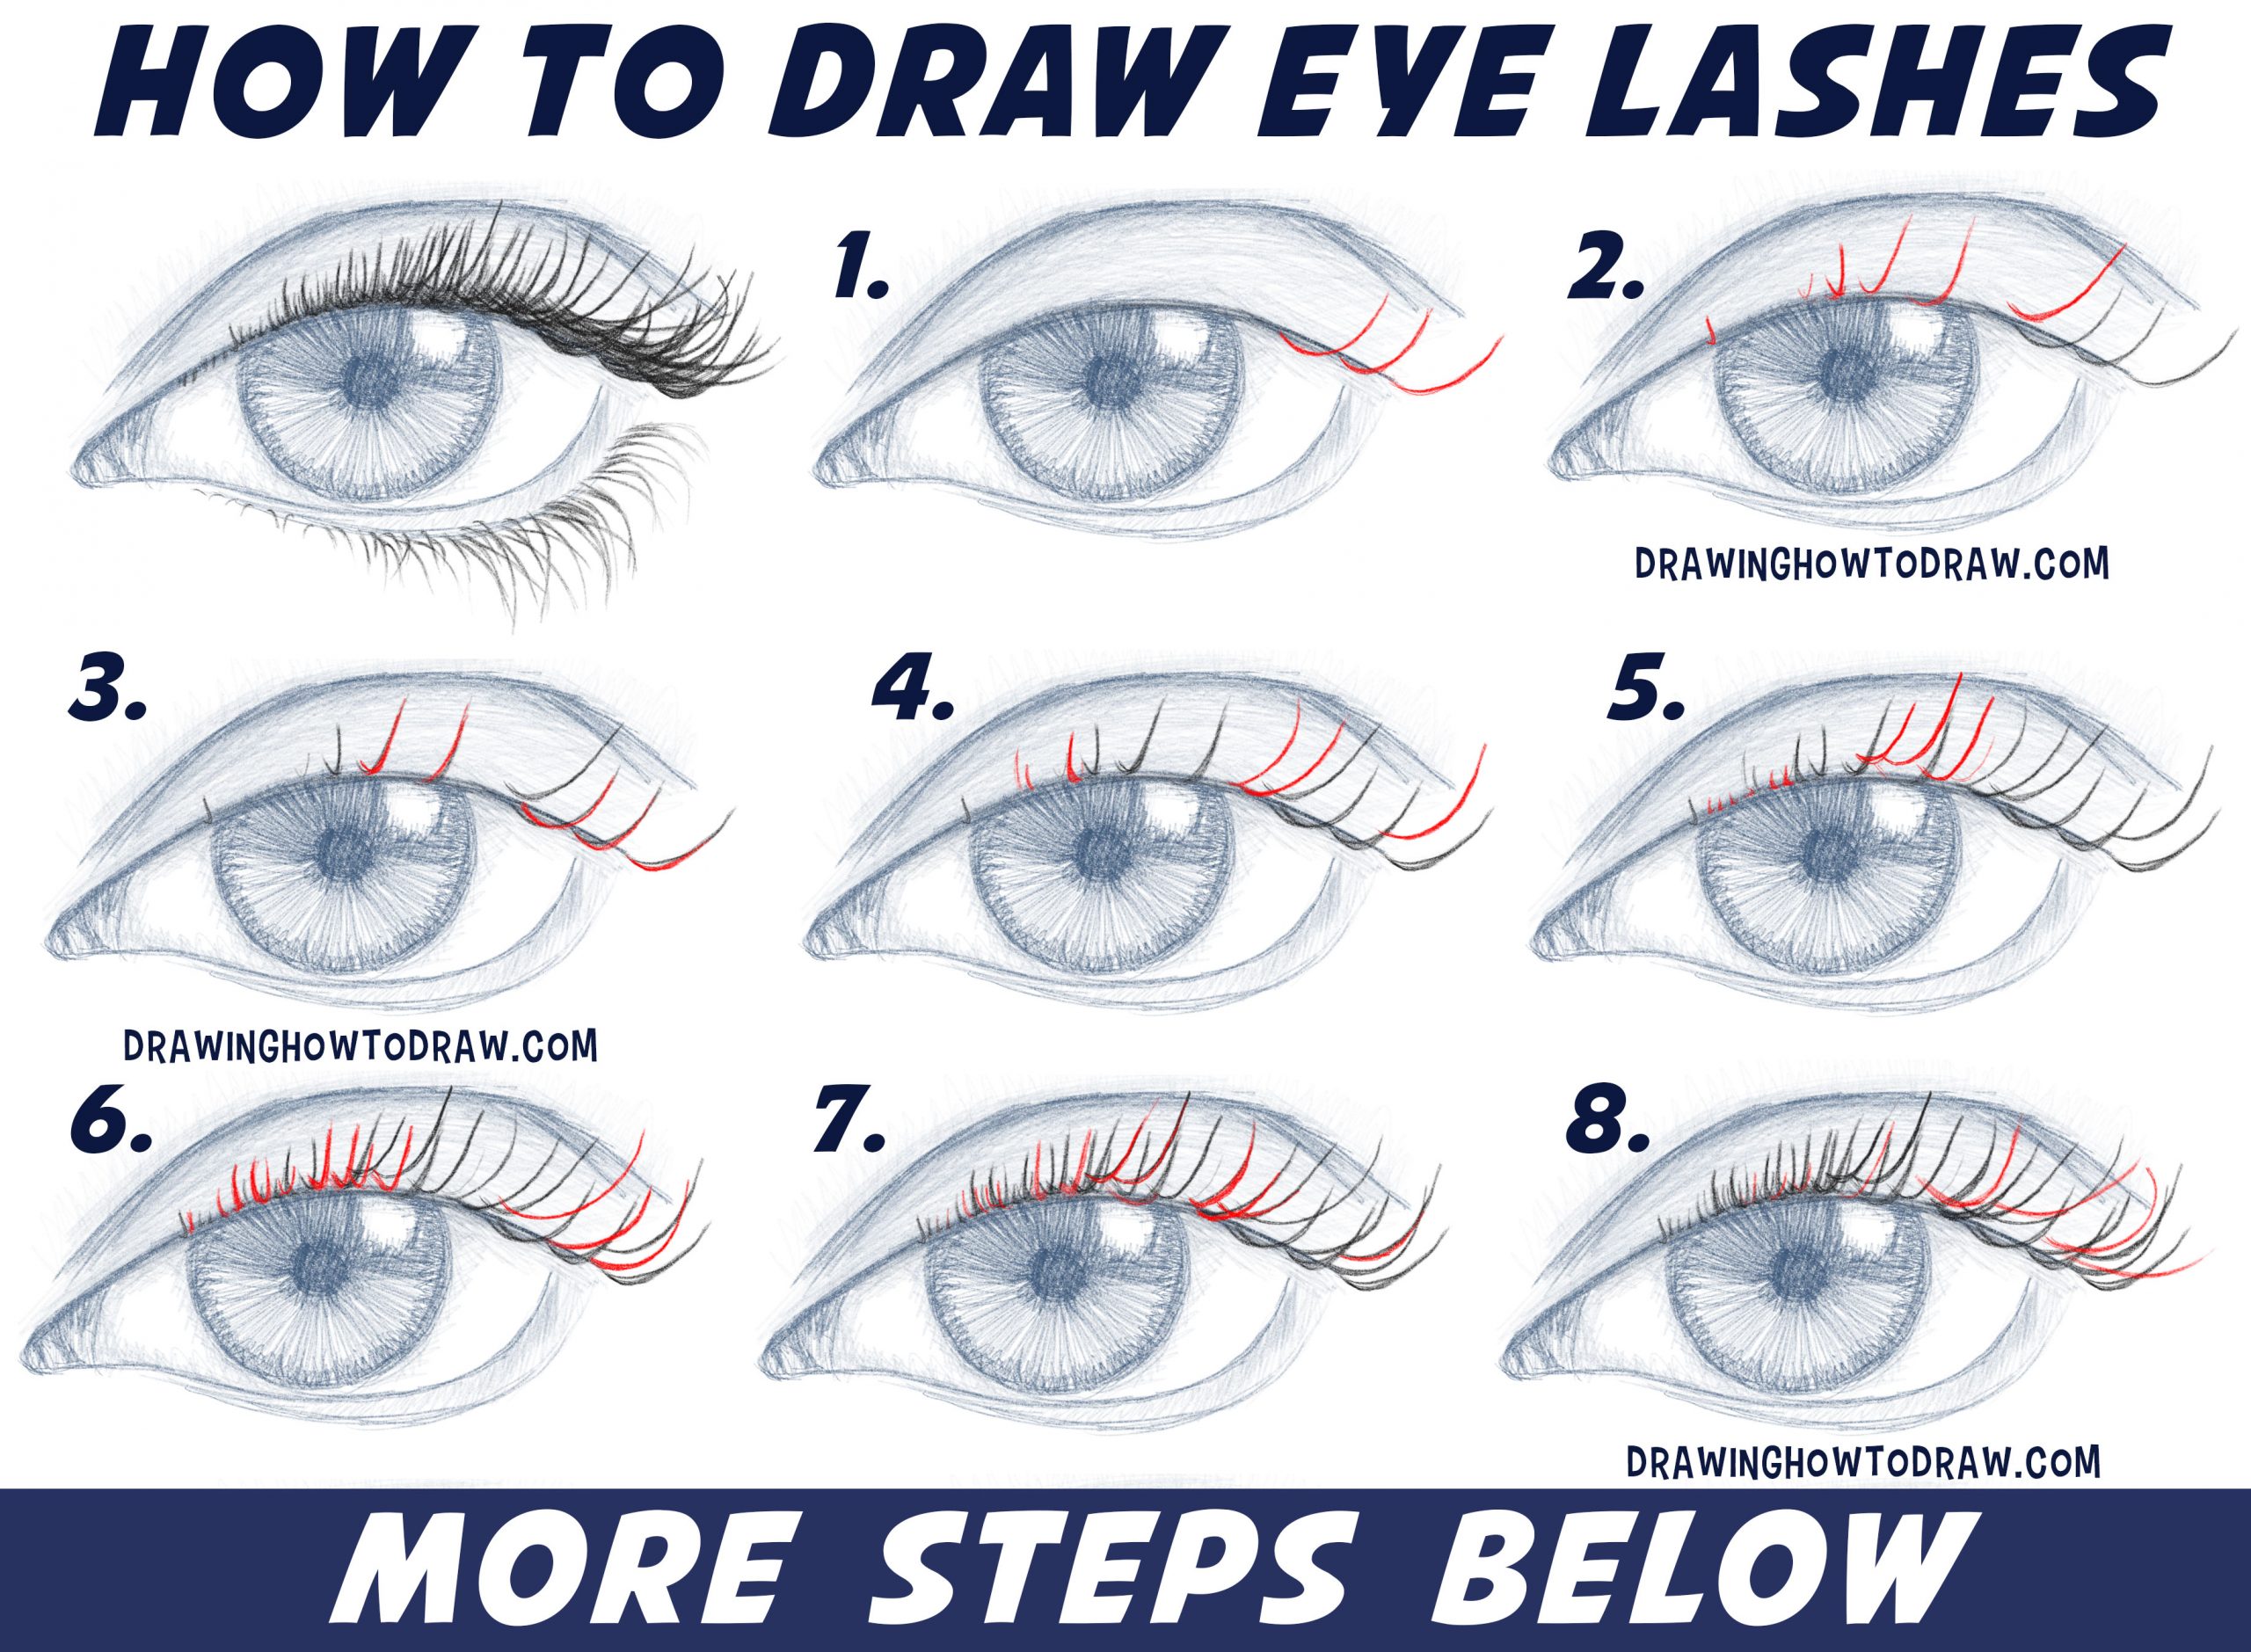 How to Draw Eyelashes Easy?